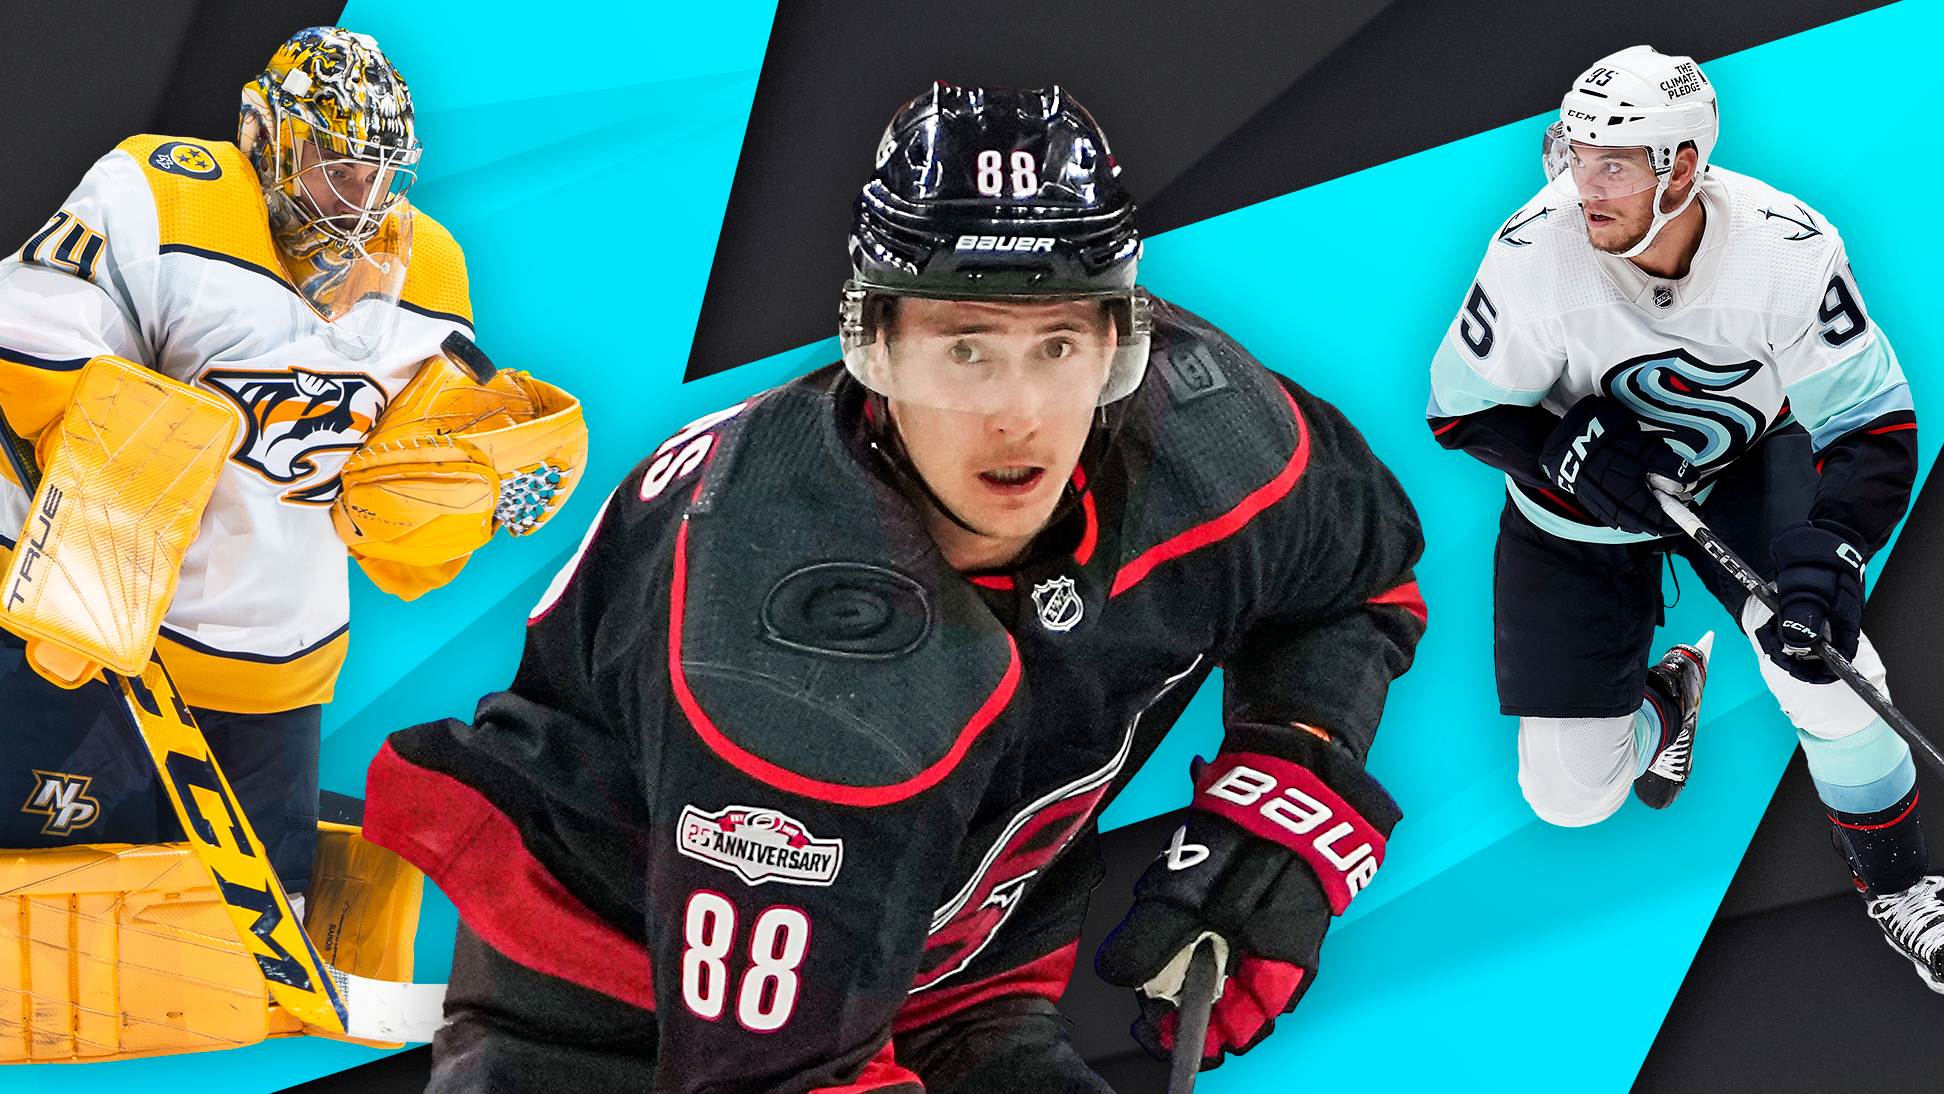 Devils, Capitals, Predators 1st NHL teams to unveil ads on helmets